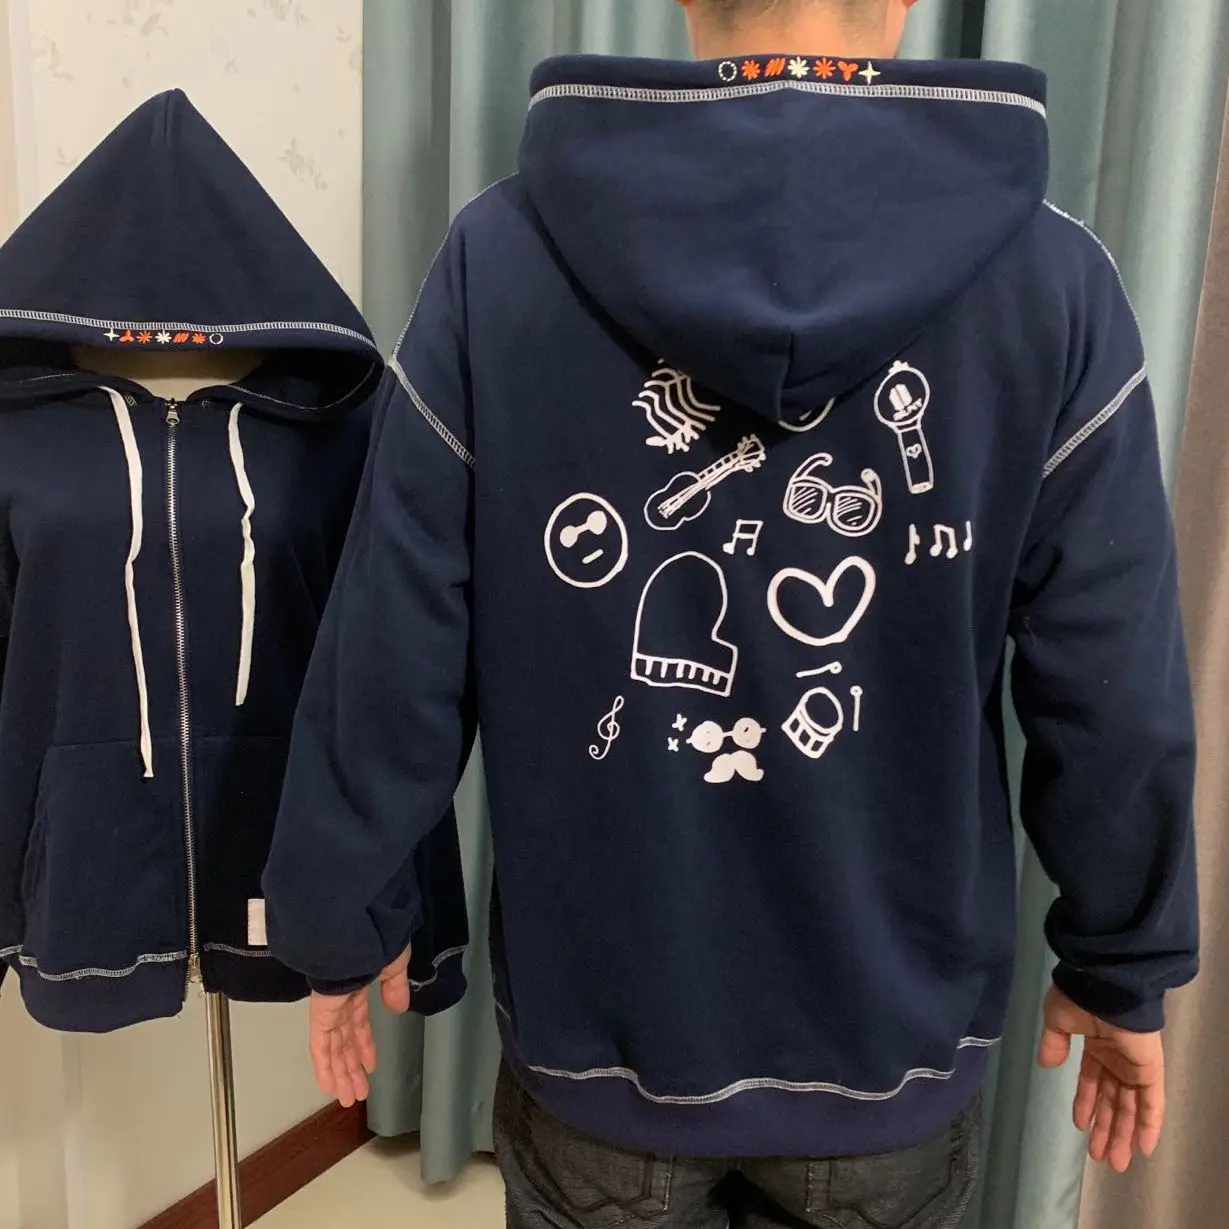 New Zip-Up Hoodie Dance Concert Zip Sweatshirt Hooded Jacket Allowed PTD ON STAGE-SEOUL Harajuku Y2k Aesthetic